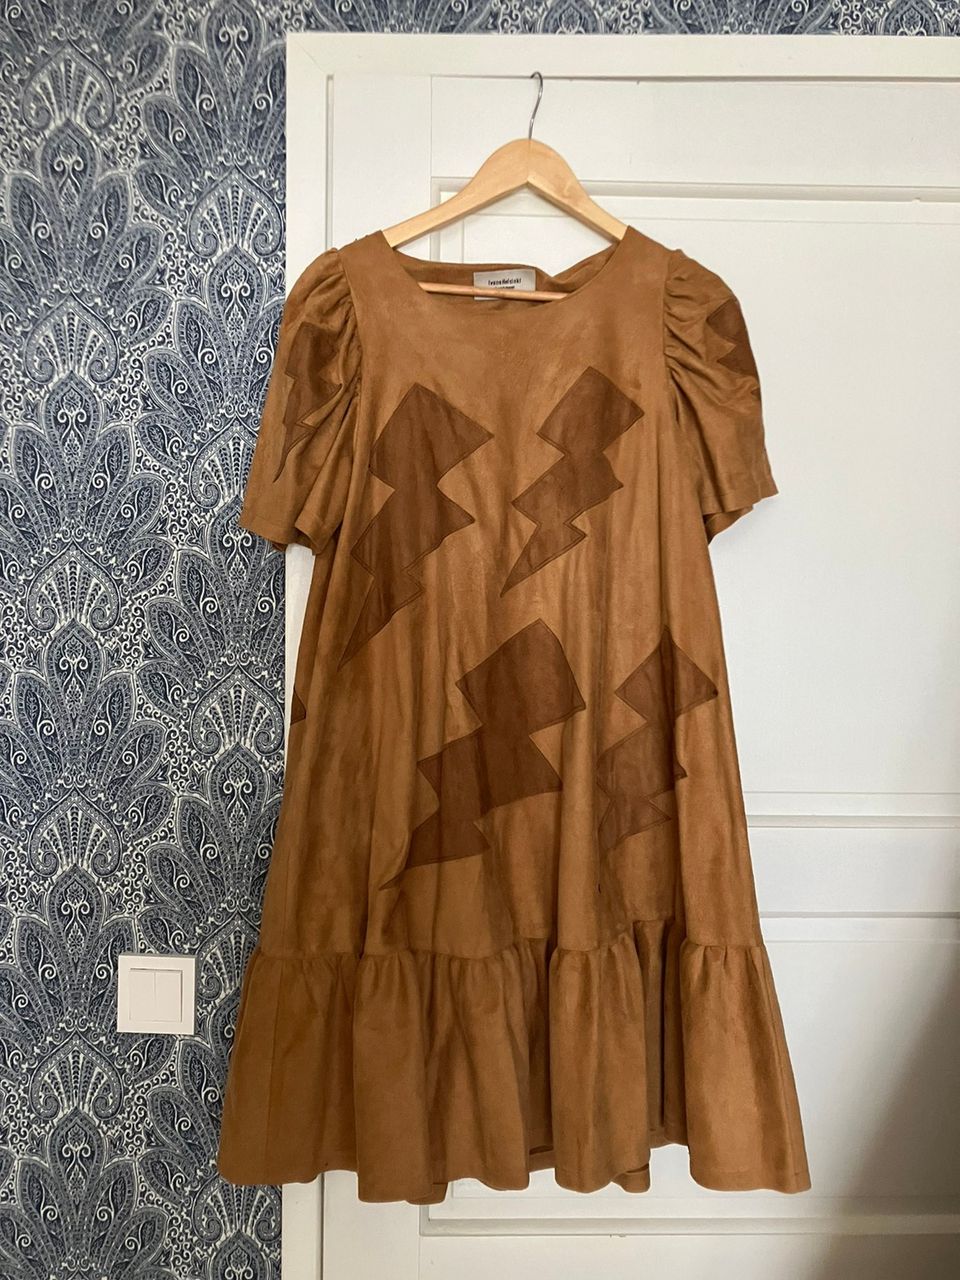 Ivana Helsinki Lea-dress